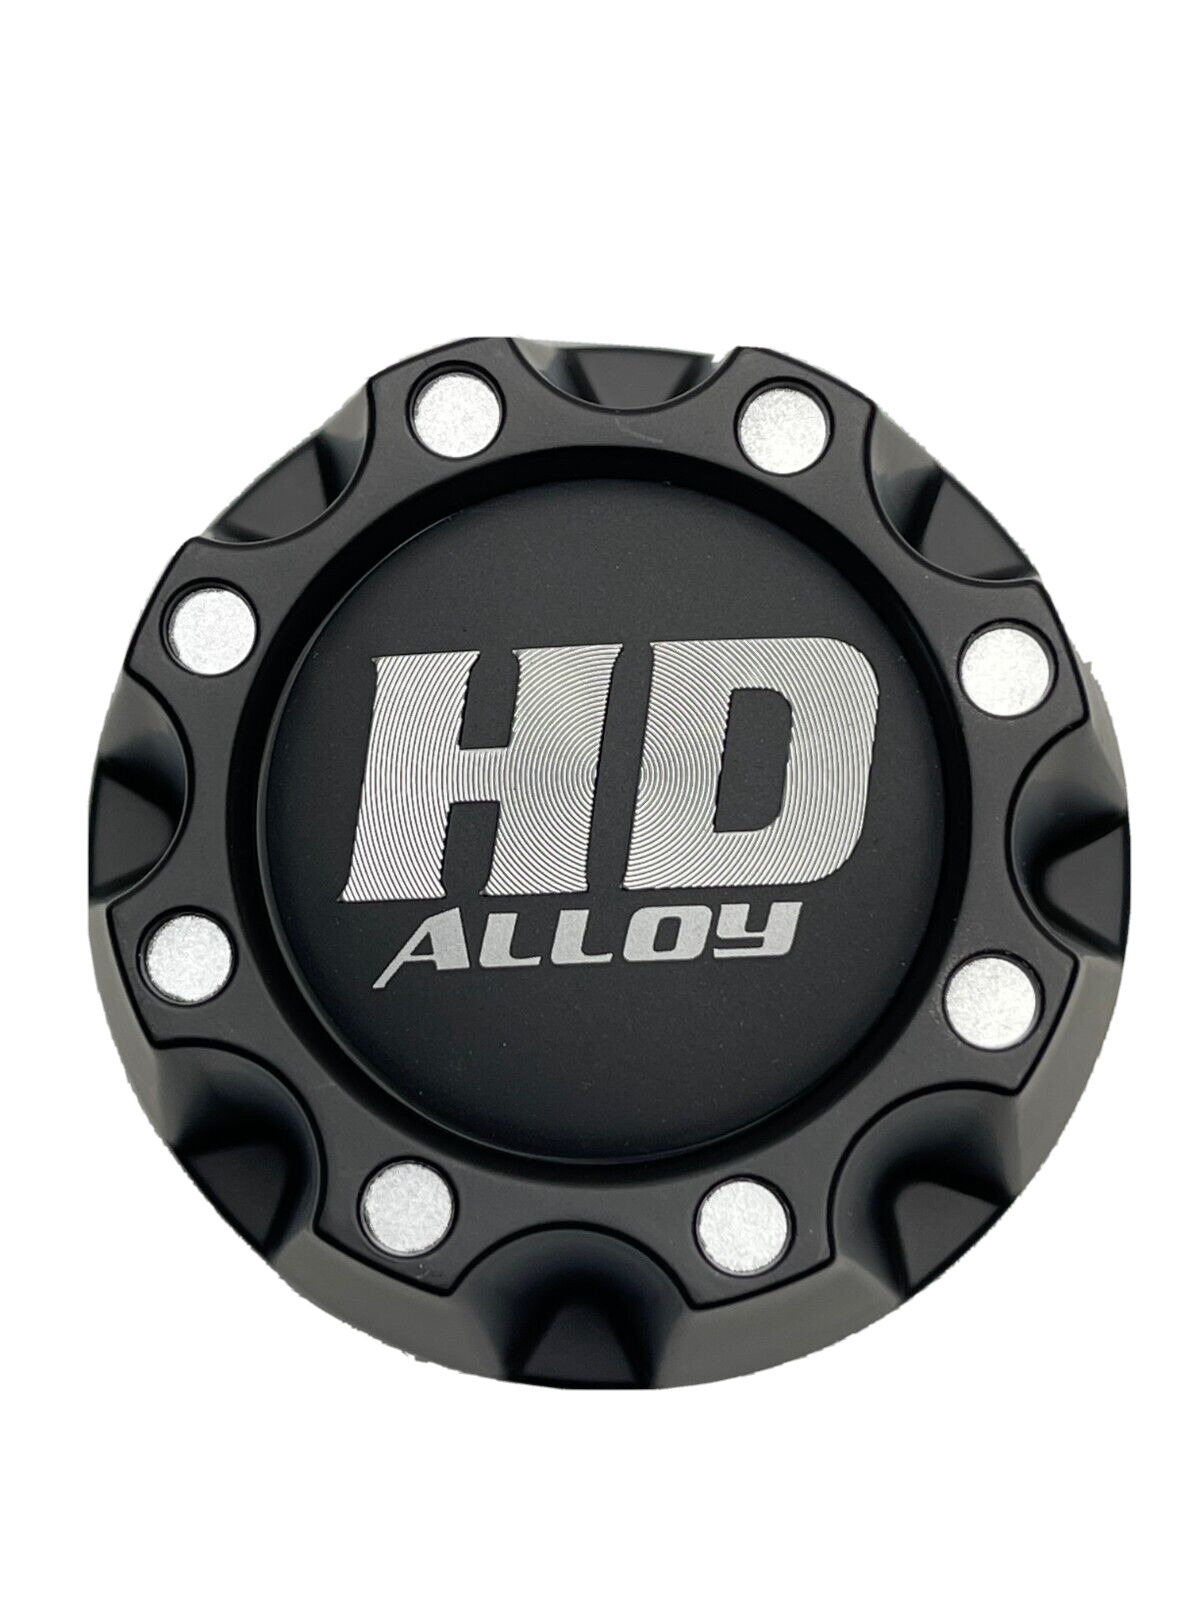 HD Alloy Matte Black Snap In Wheel Center Cap 311137-FB+HD46201FB 311137